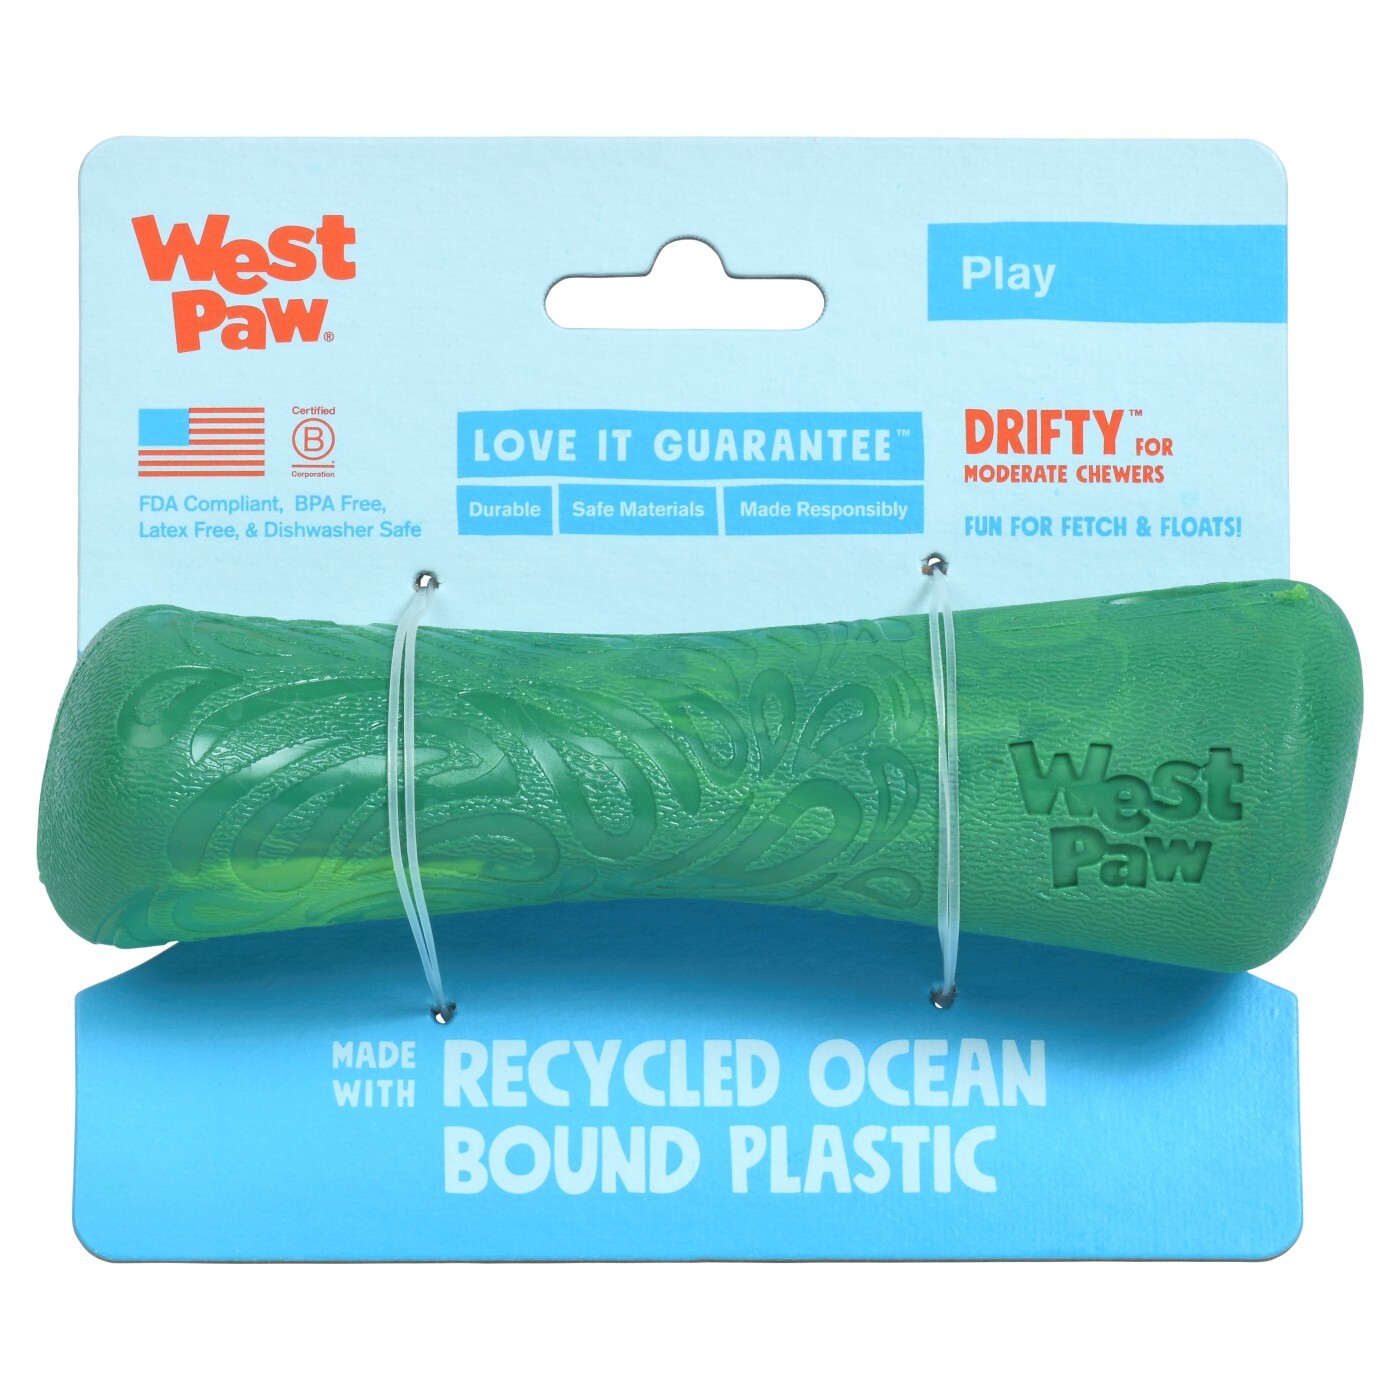 West Paw Seaflex Recycled Plastic Fetch Dog Toy - Drifty image 6